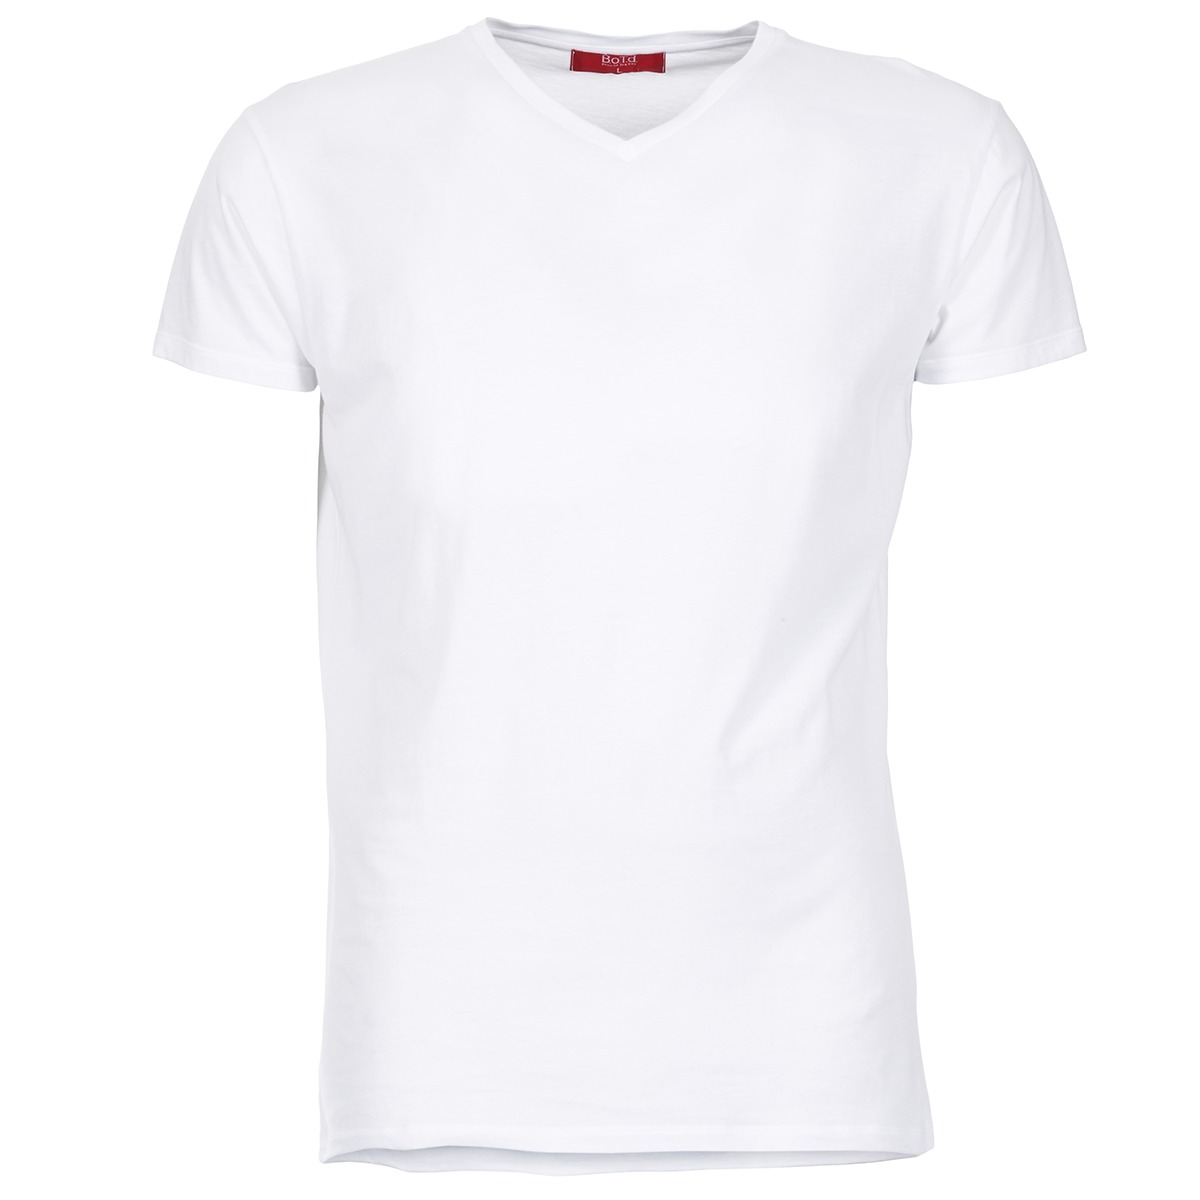 Vêtements Homme embossed logo relaxed-fit hoodie Weiß ECALORA Blanc